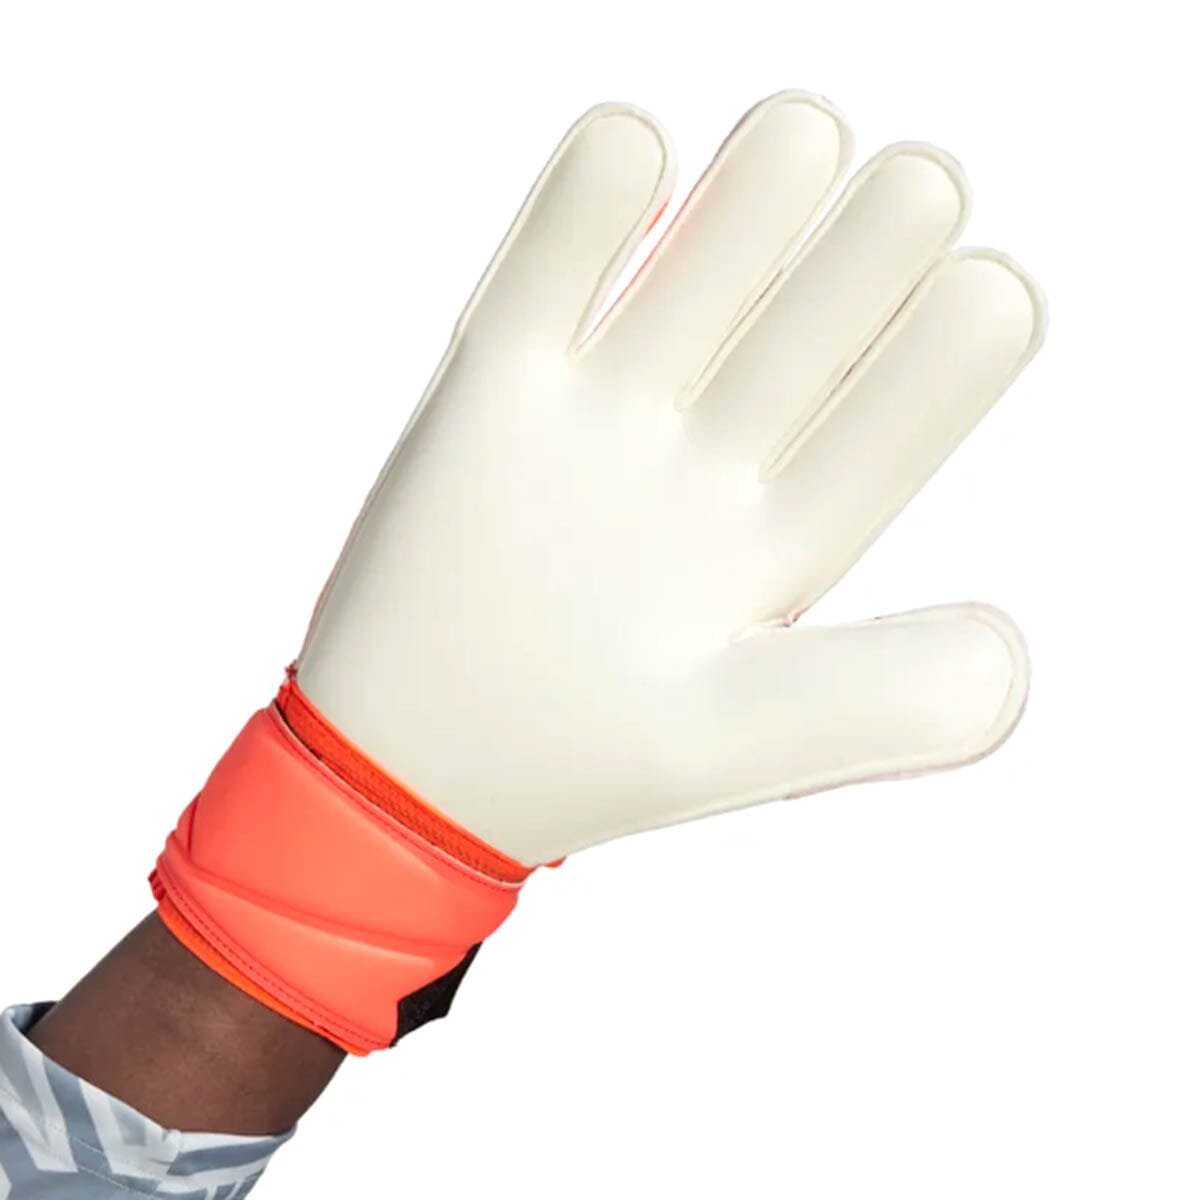 adidas Predator Edge Match Soccer Goalkeeper Gloves